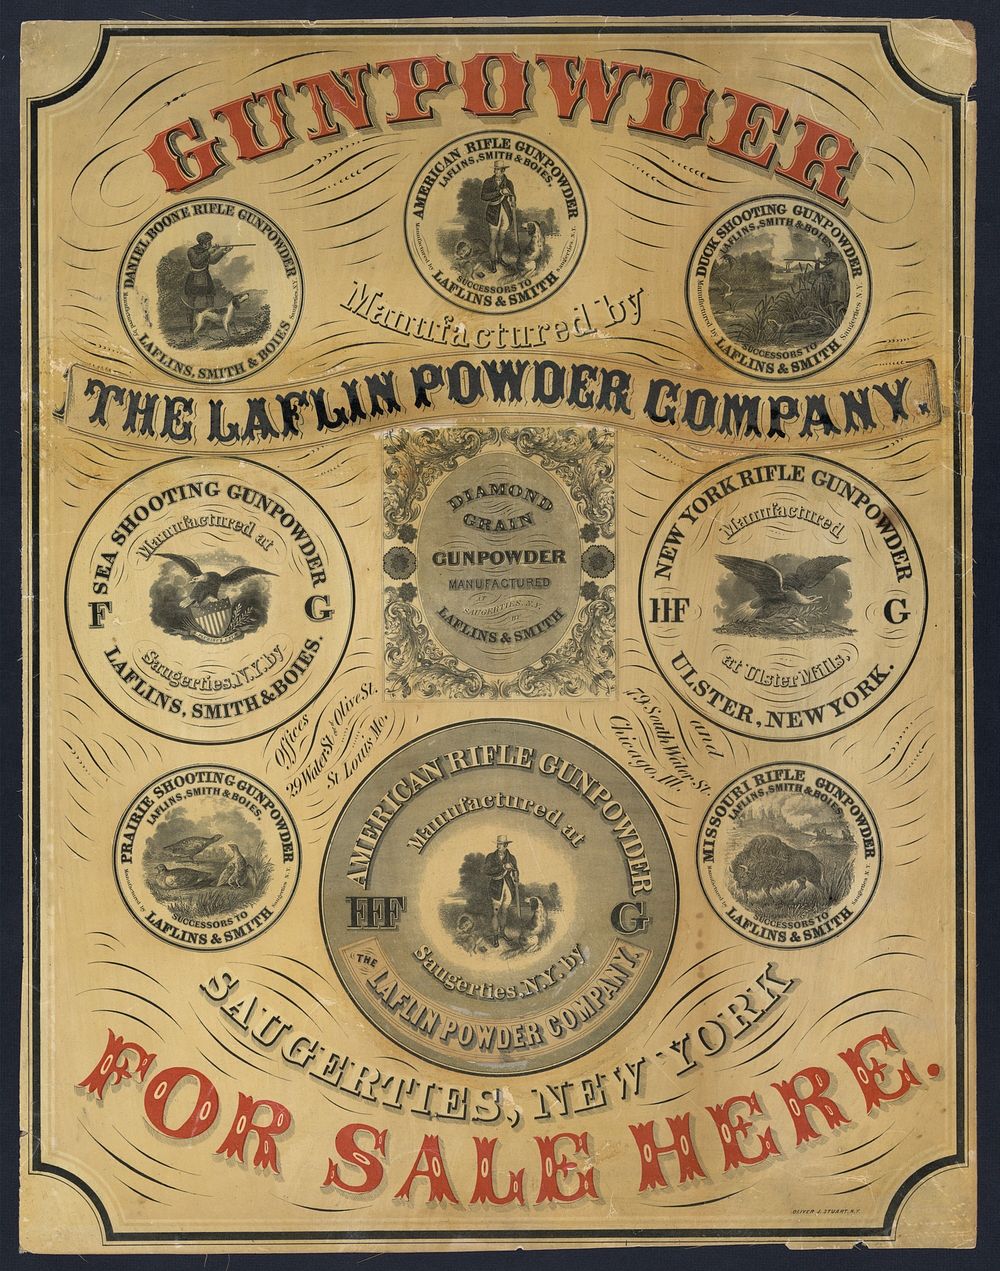 Gunpowder for sale here / Oliver J. Stuart, N.Y.